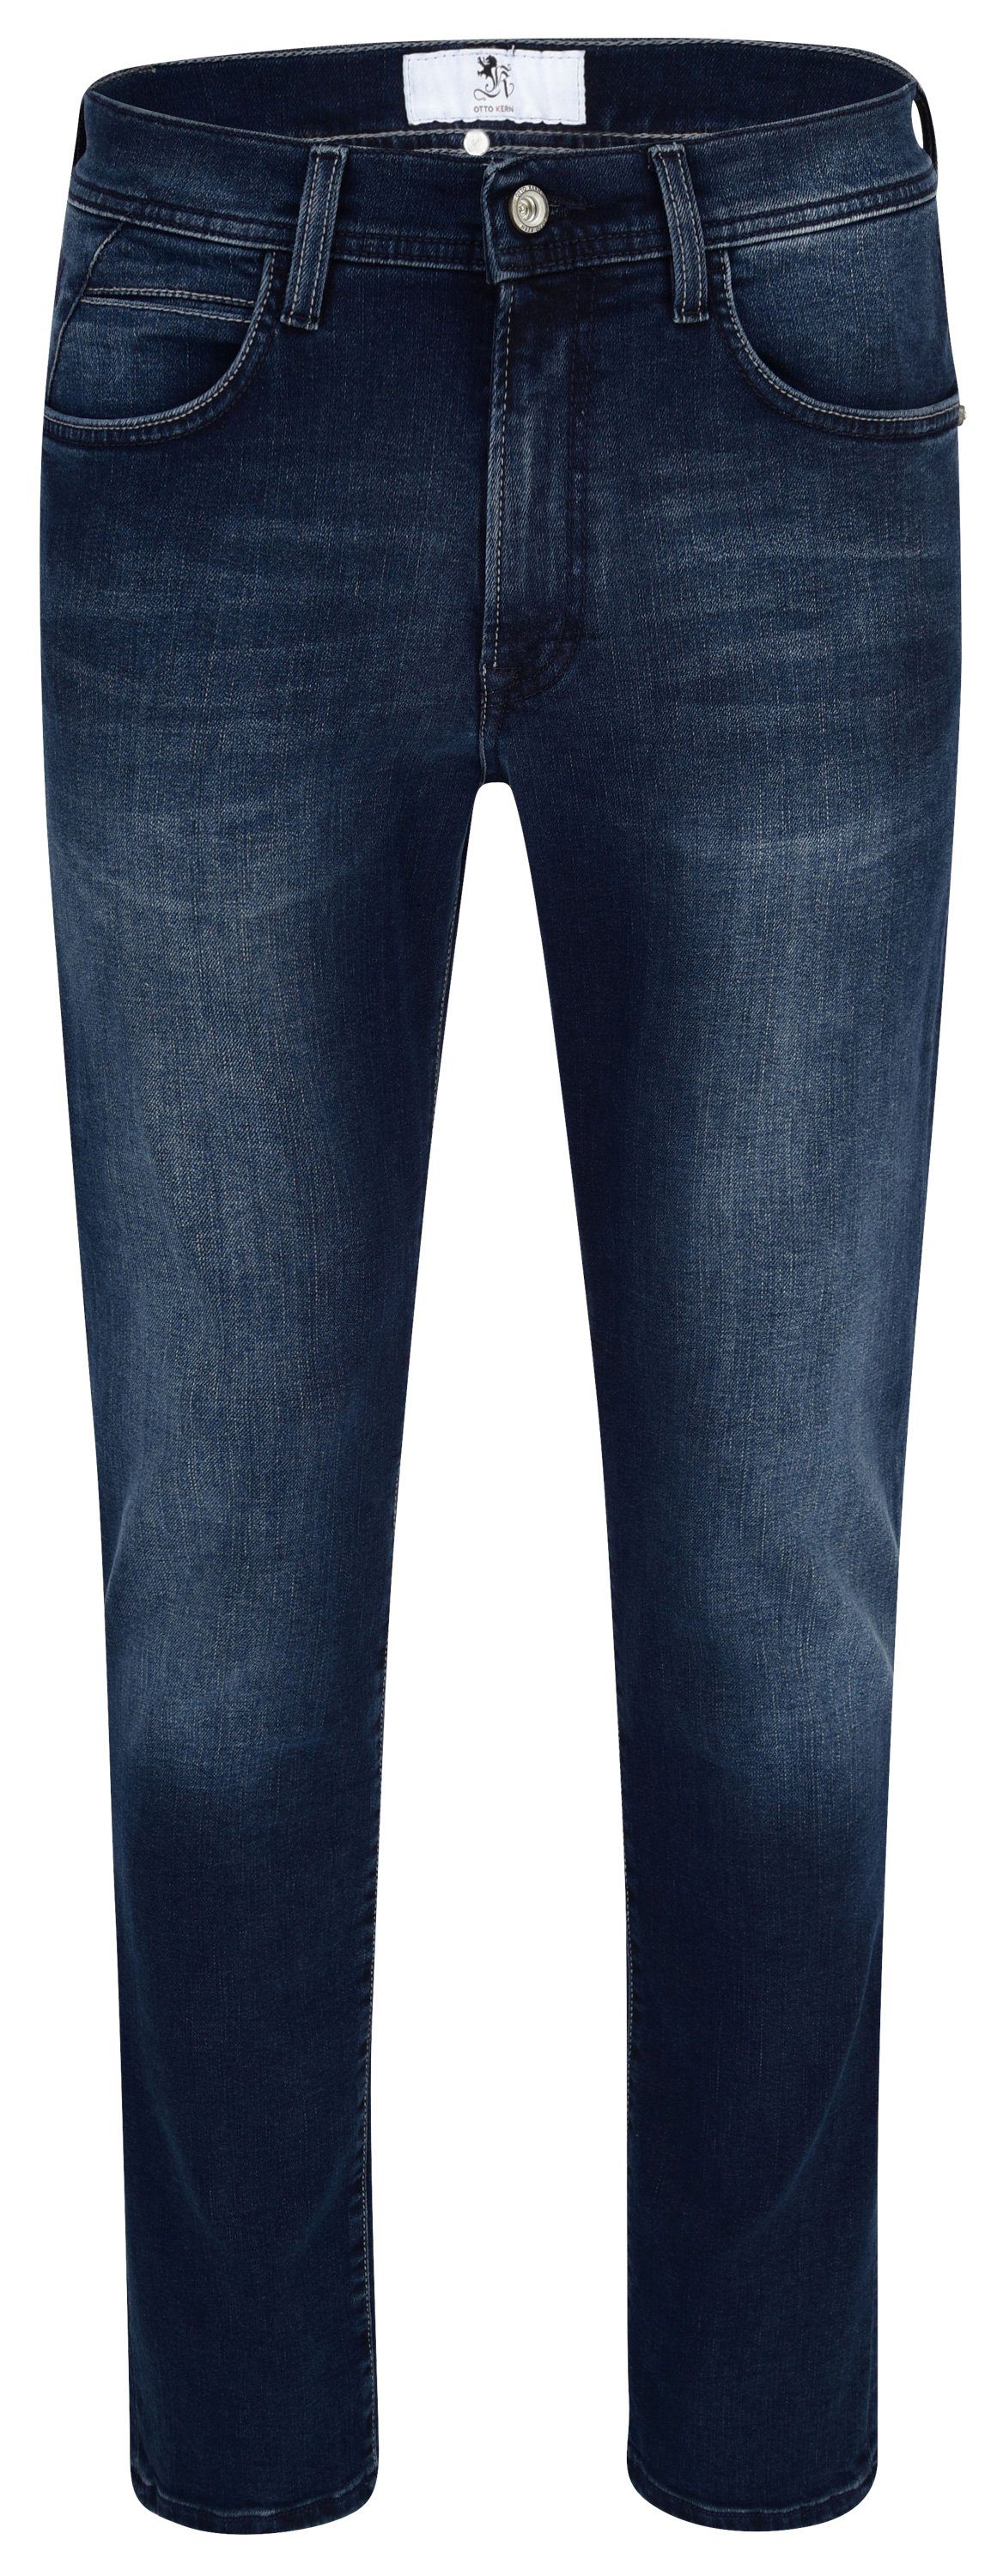  Kern 5-Pocket-Jeans OTTO KERN JOHN blue black used buffies 67043 6811.6804